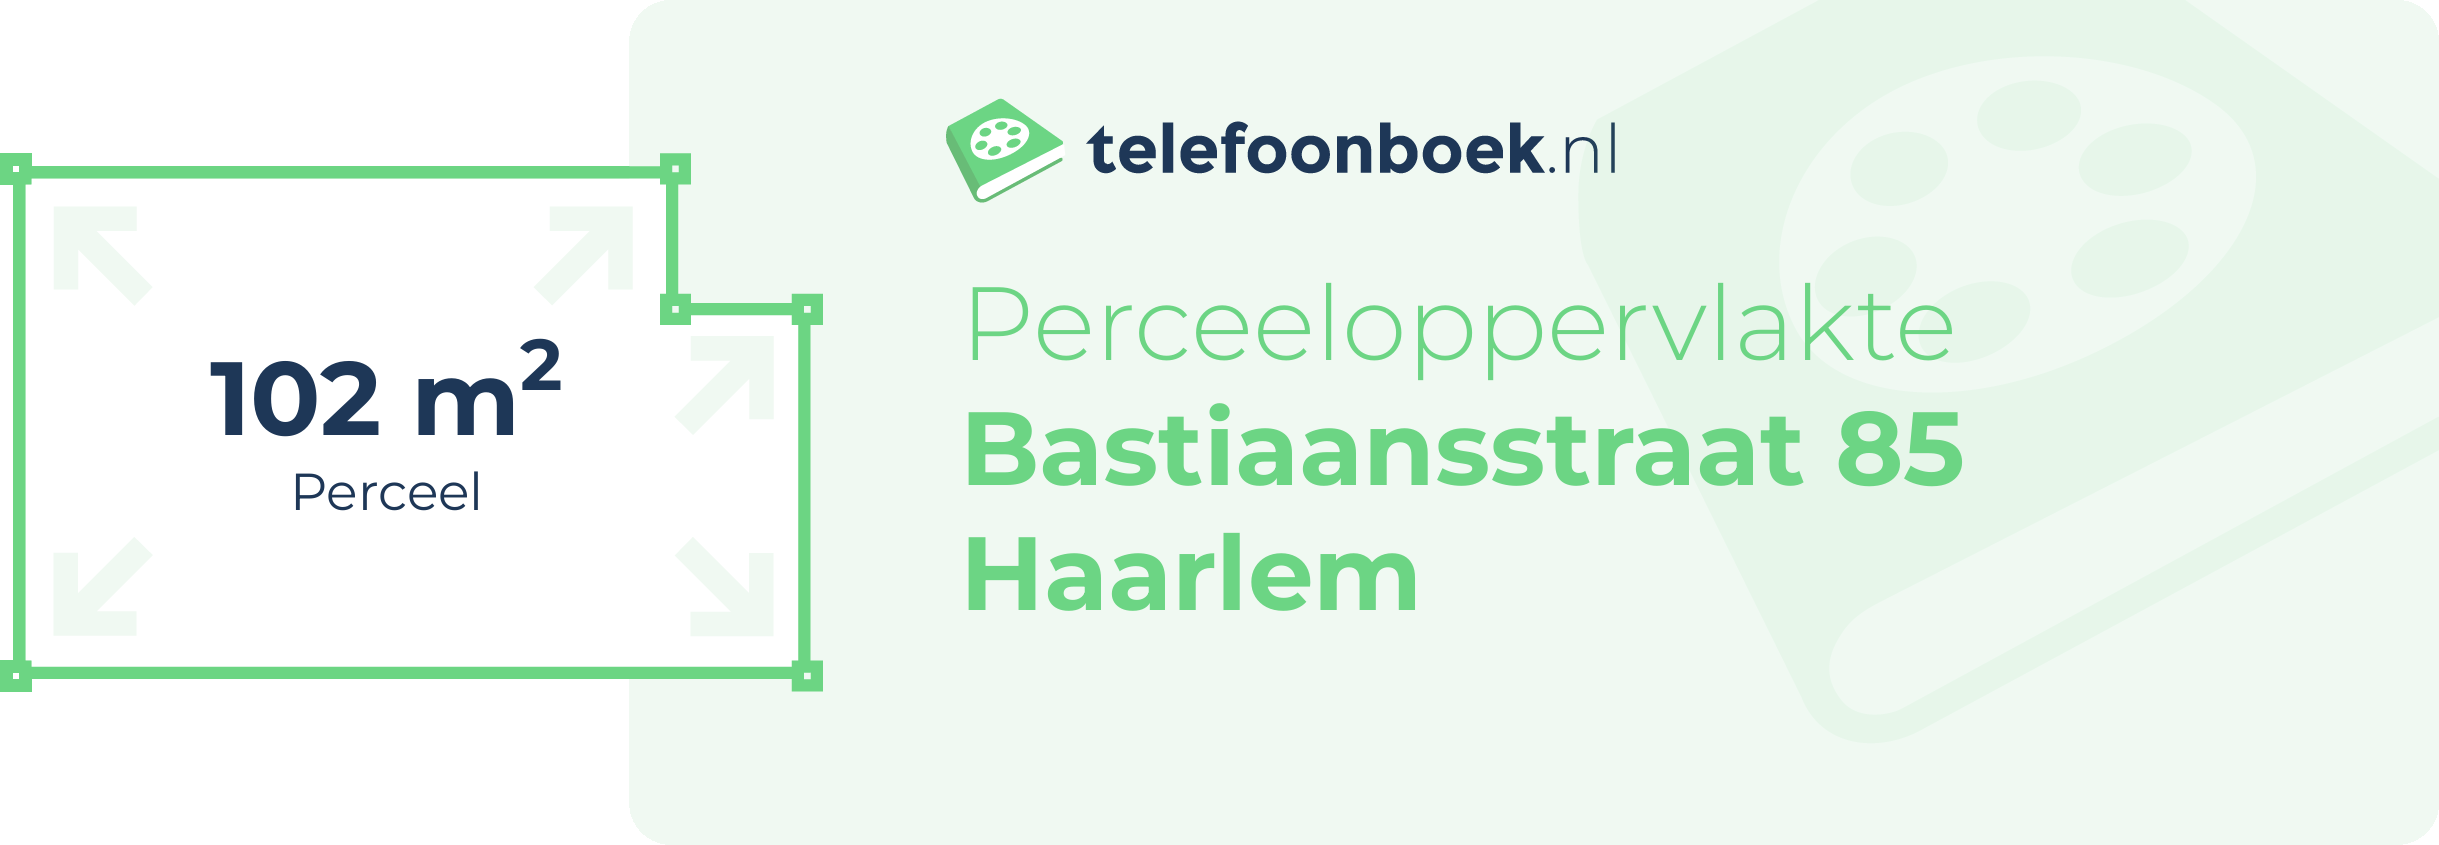 Perceeloppervlakte Bastiaansstraat 85 Haarlem